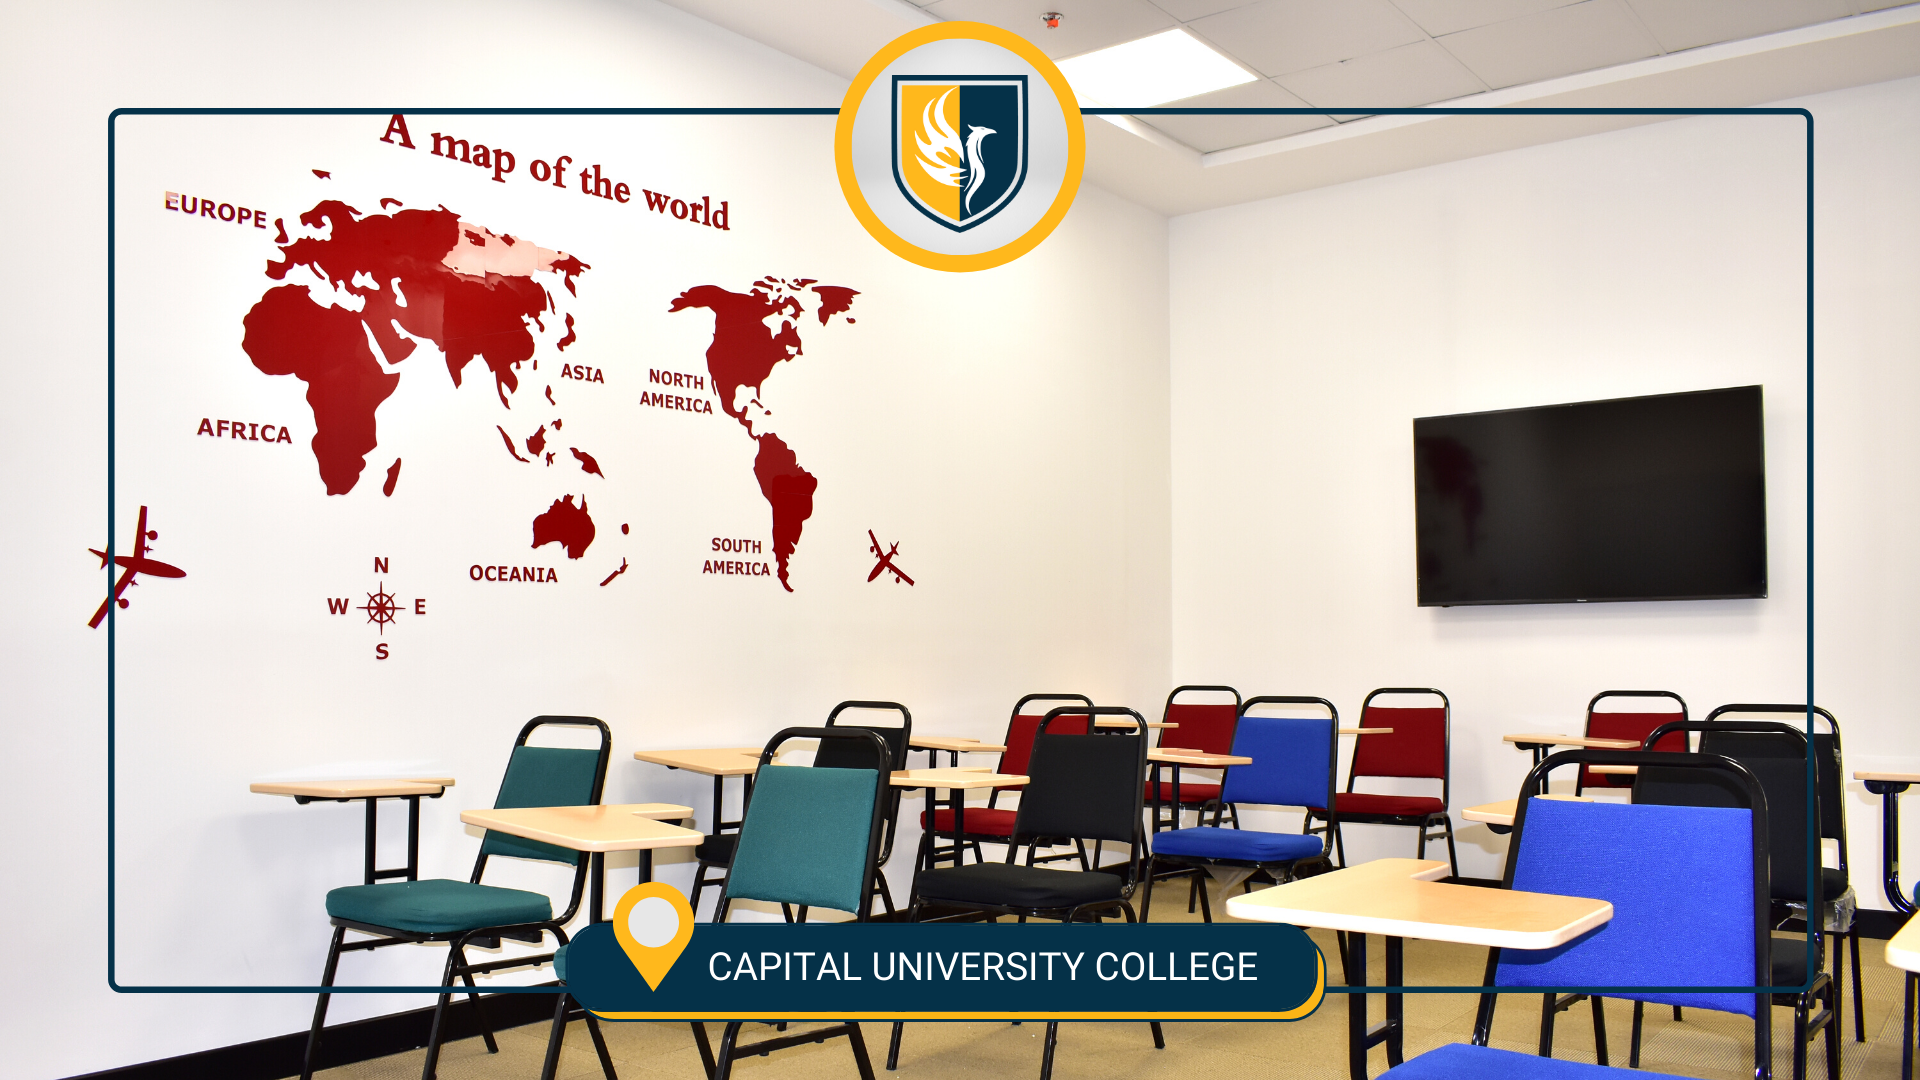 Capital University College UAE